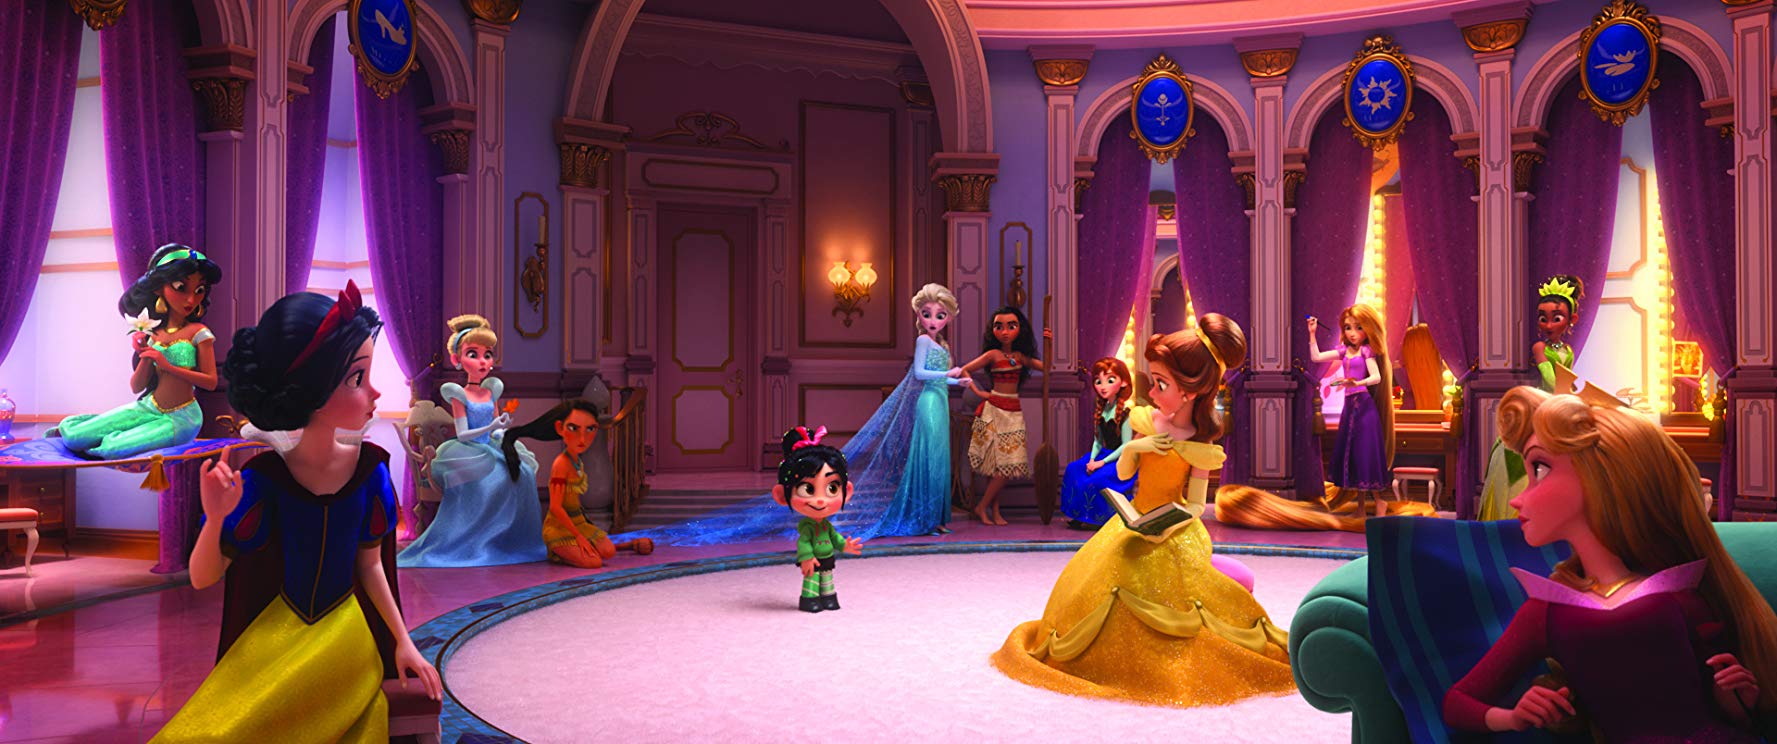 vanellope meets the Disney princesses